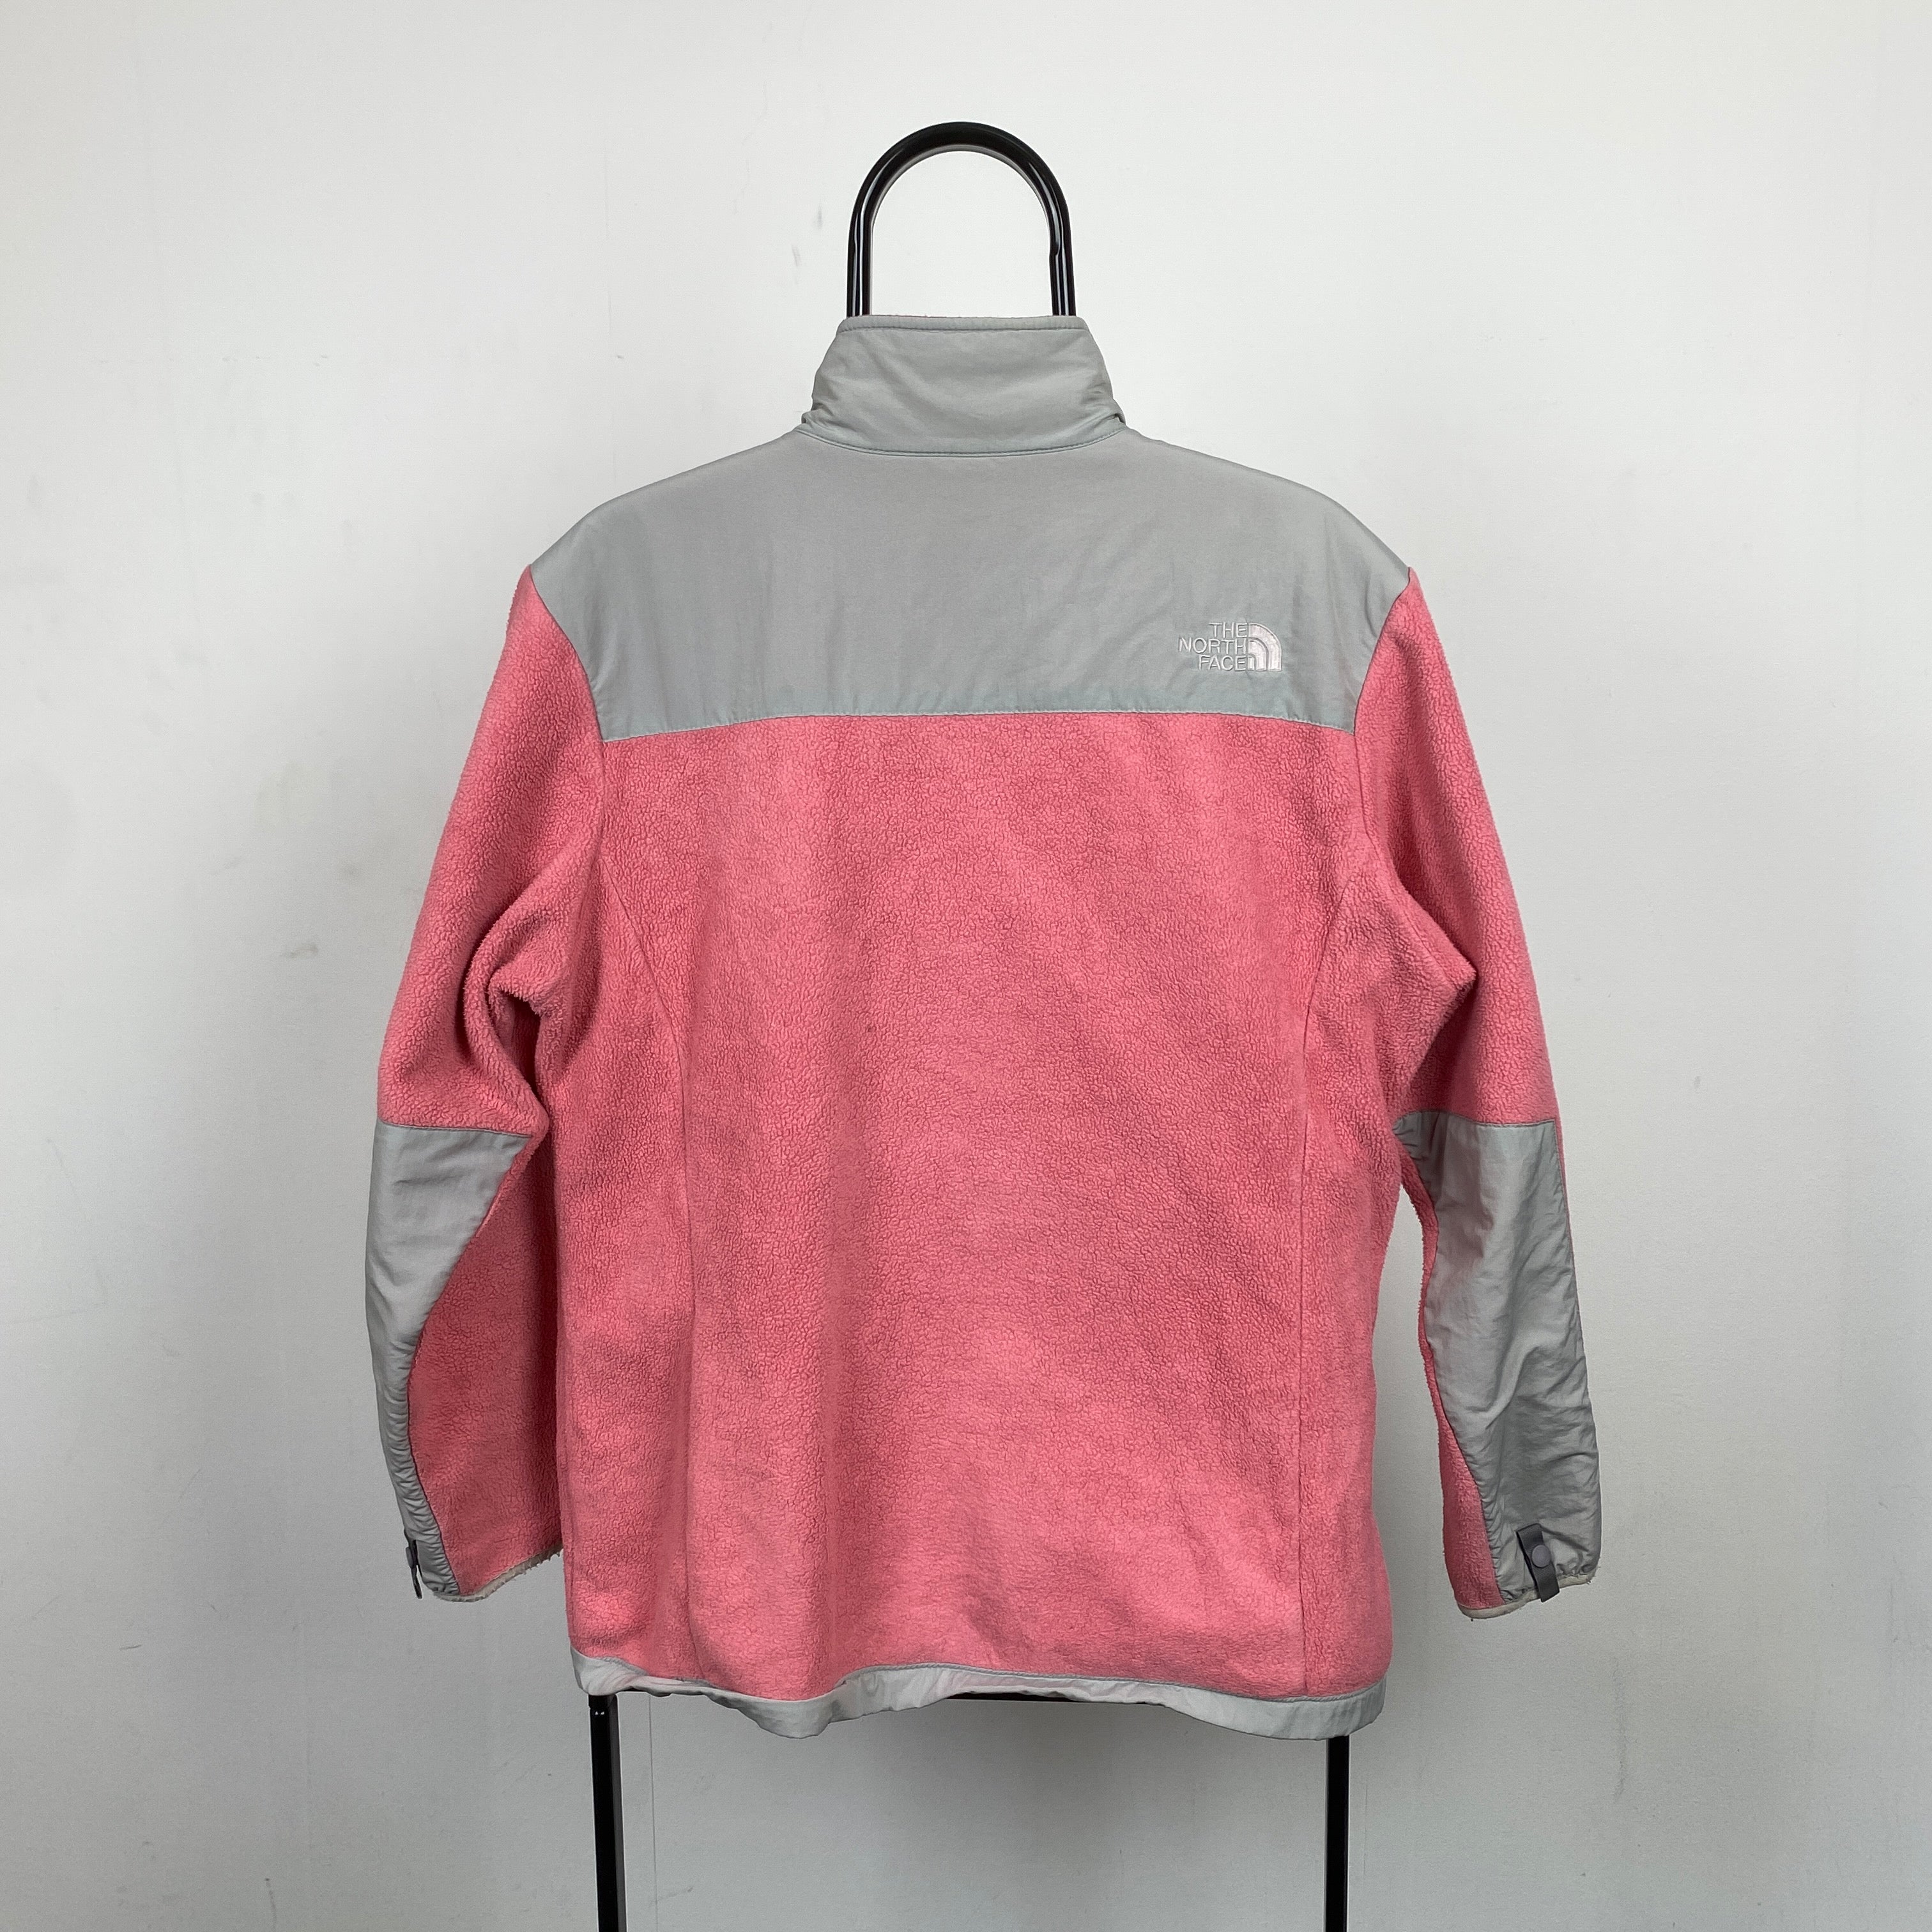 Retro The North Face Denali Fleece Sweatshirt Pink Small